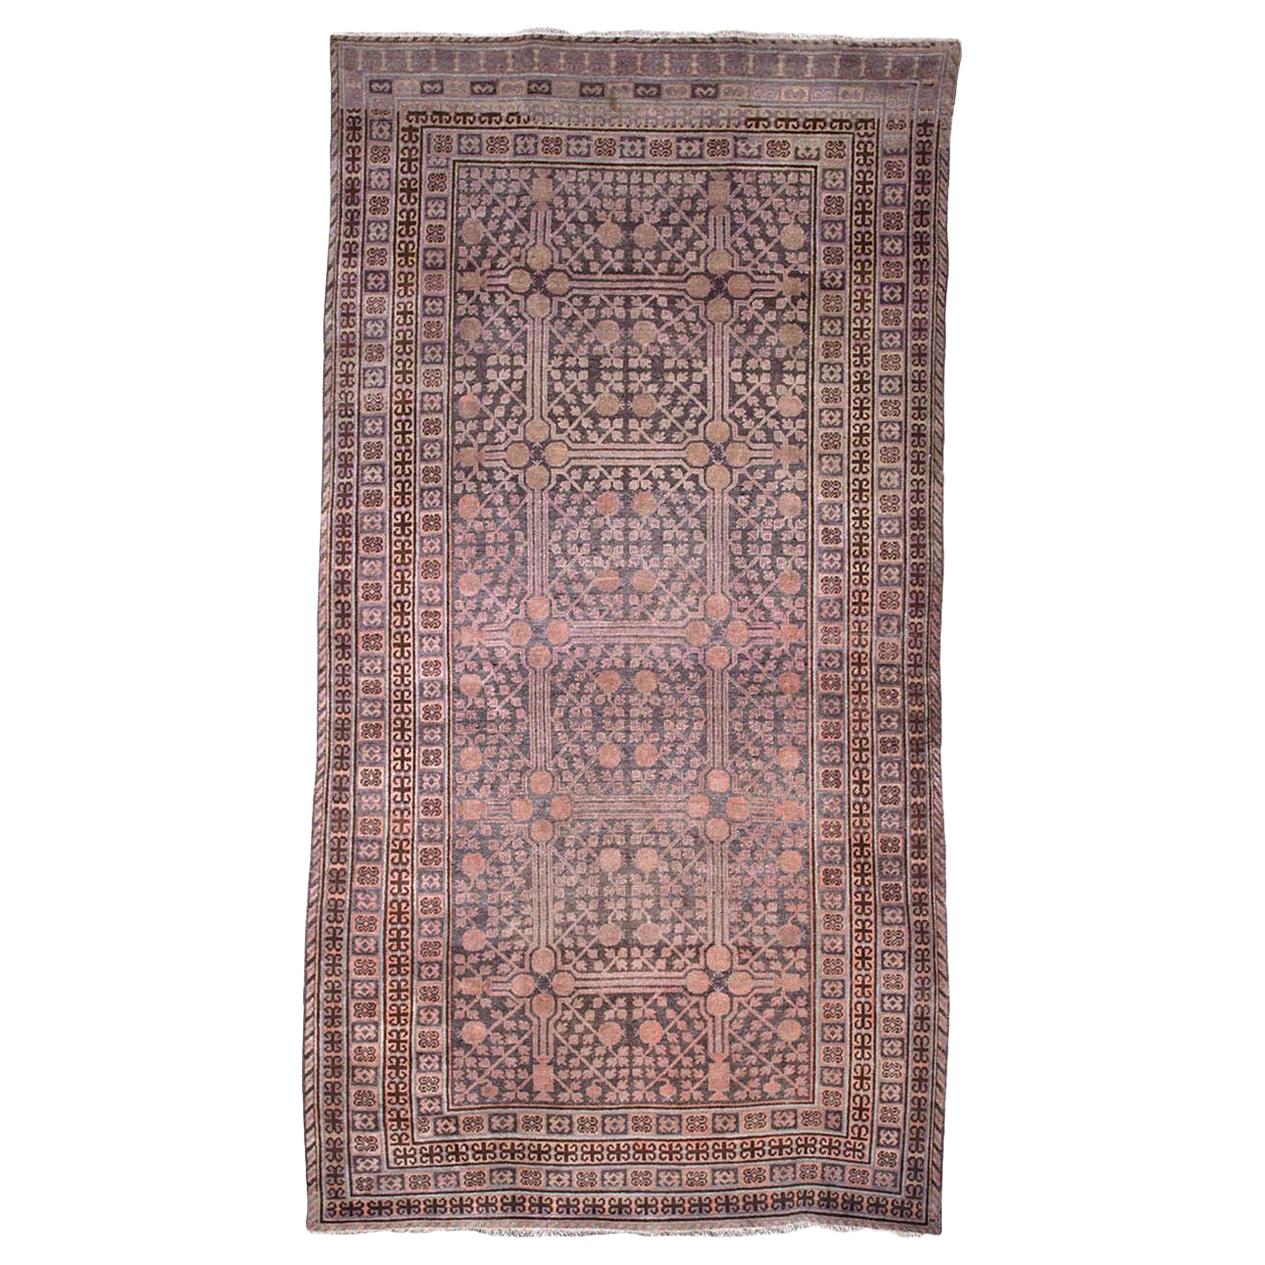 Rare Antique Kothan Carpet or Rug